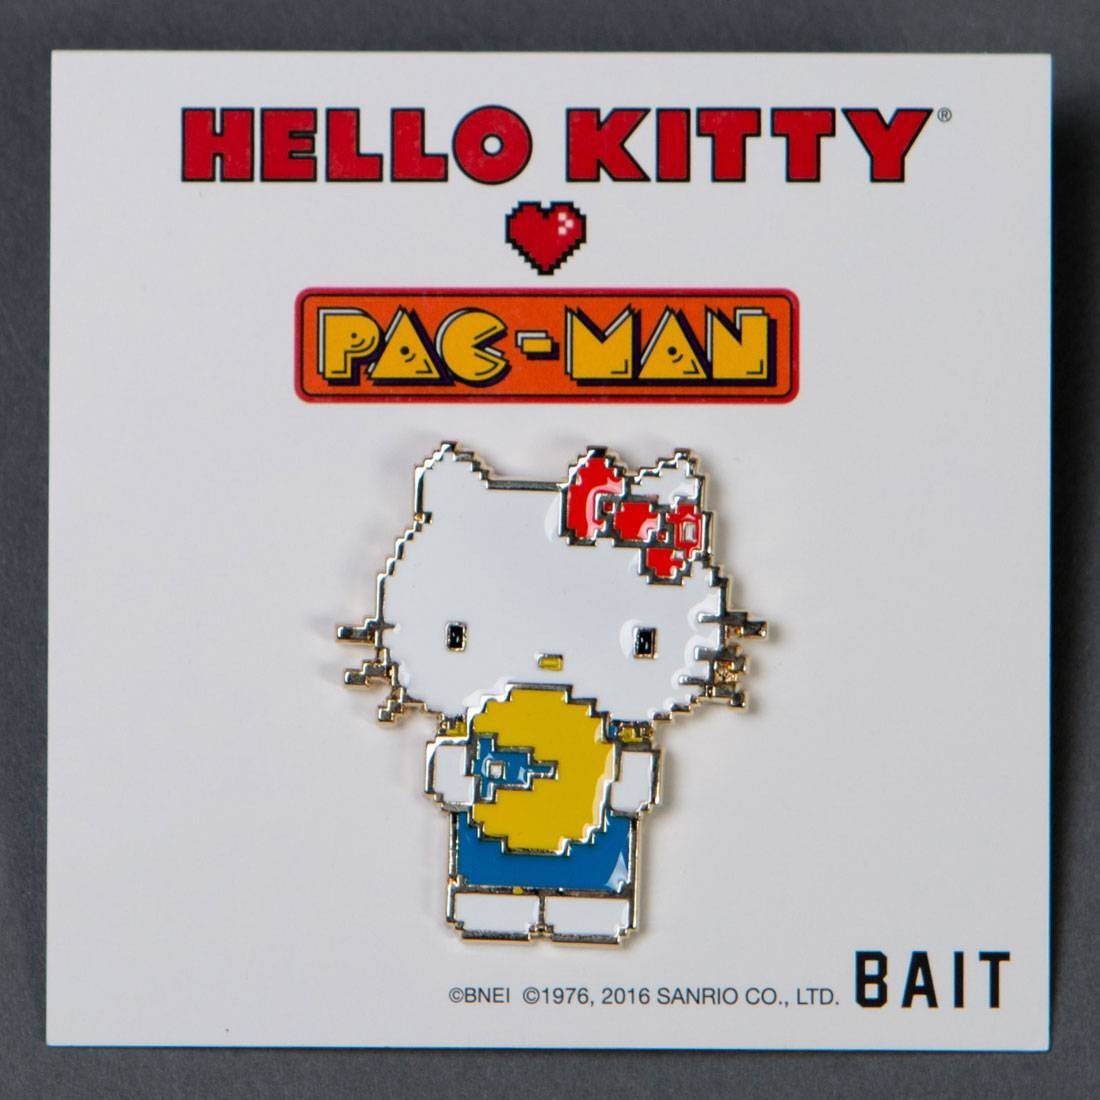 BAIT x Sanrio x Pac-Man Hello Kitty Pin (white)